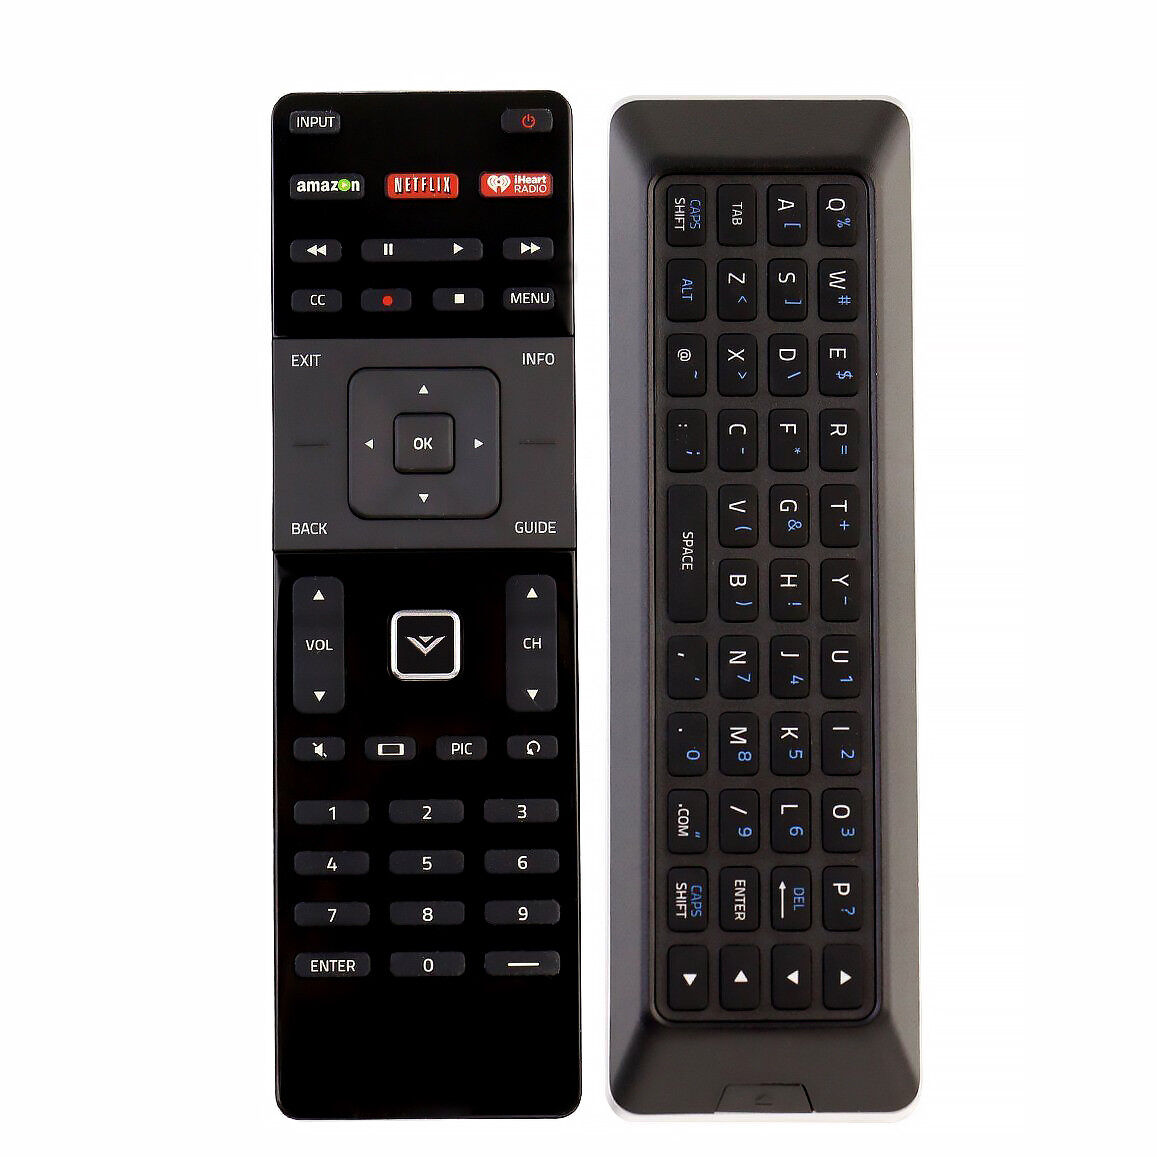 New XRT500 LED remote Control with QWERTY keyboard backlight for VIZIO Smart TV Vizio XRT500 - фотография #3